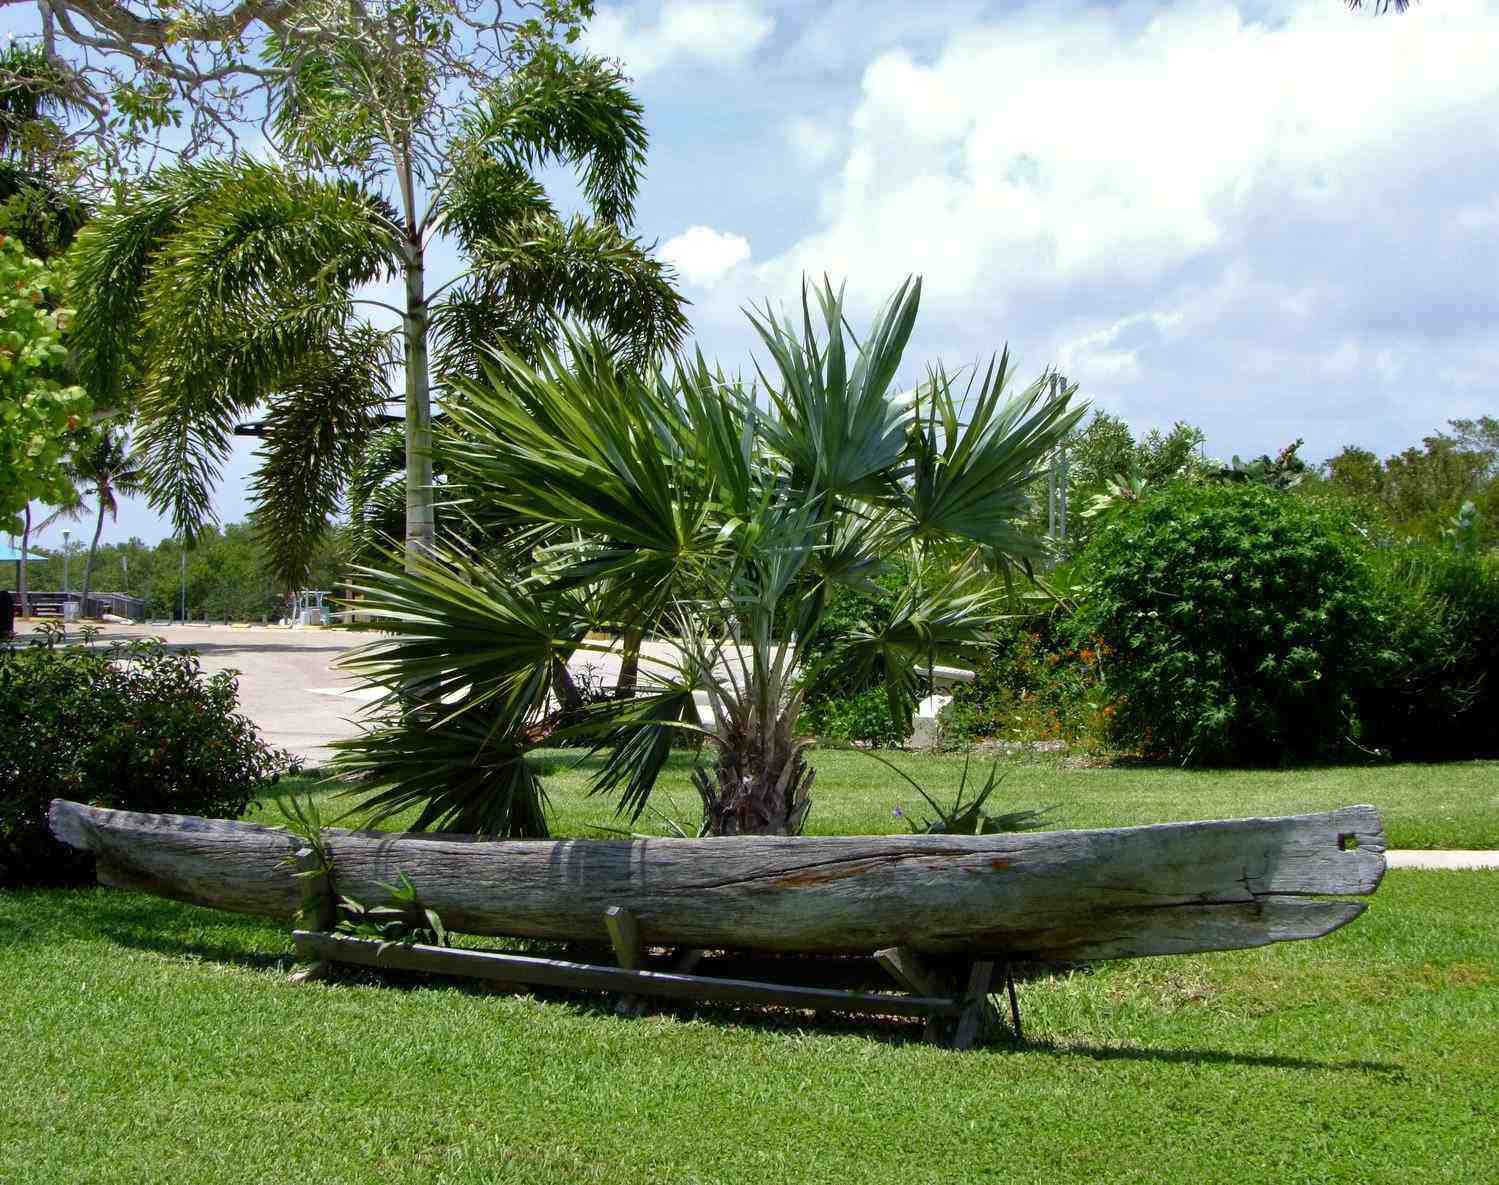 Native American Canoe, Object | Boat | Wood | Grass | Green | Transport | History | American